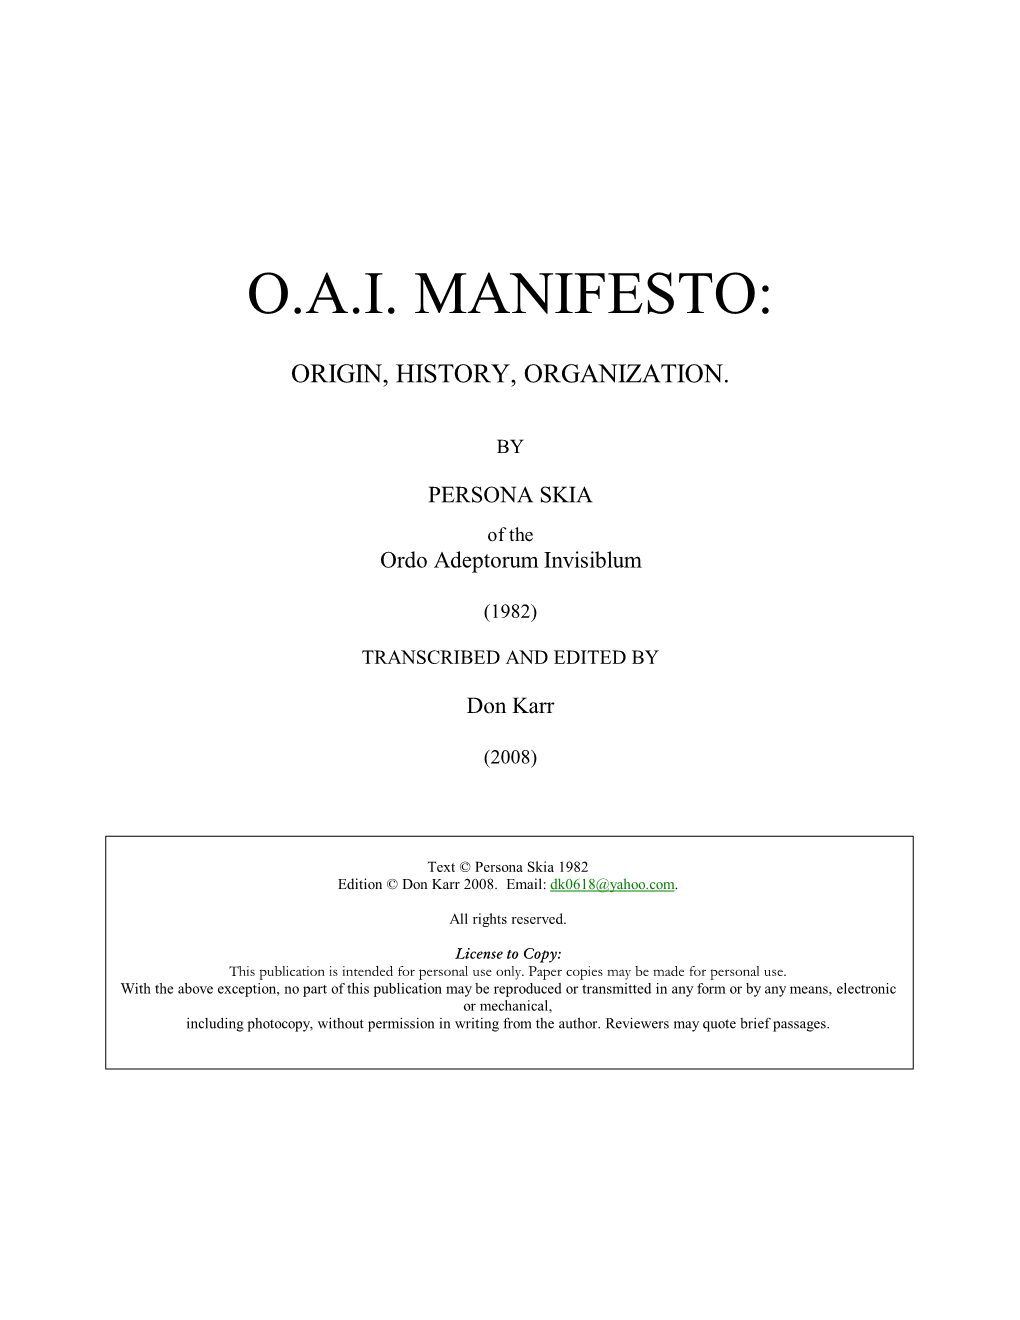 O.A.I. Manifesto